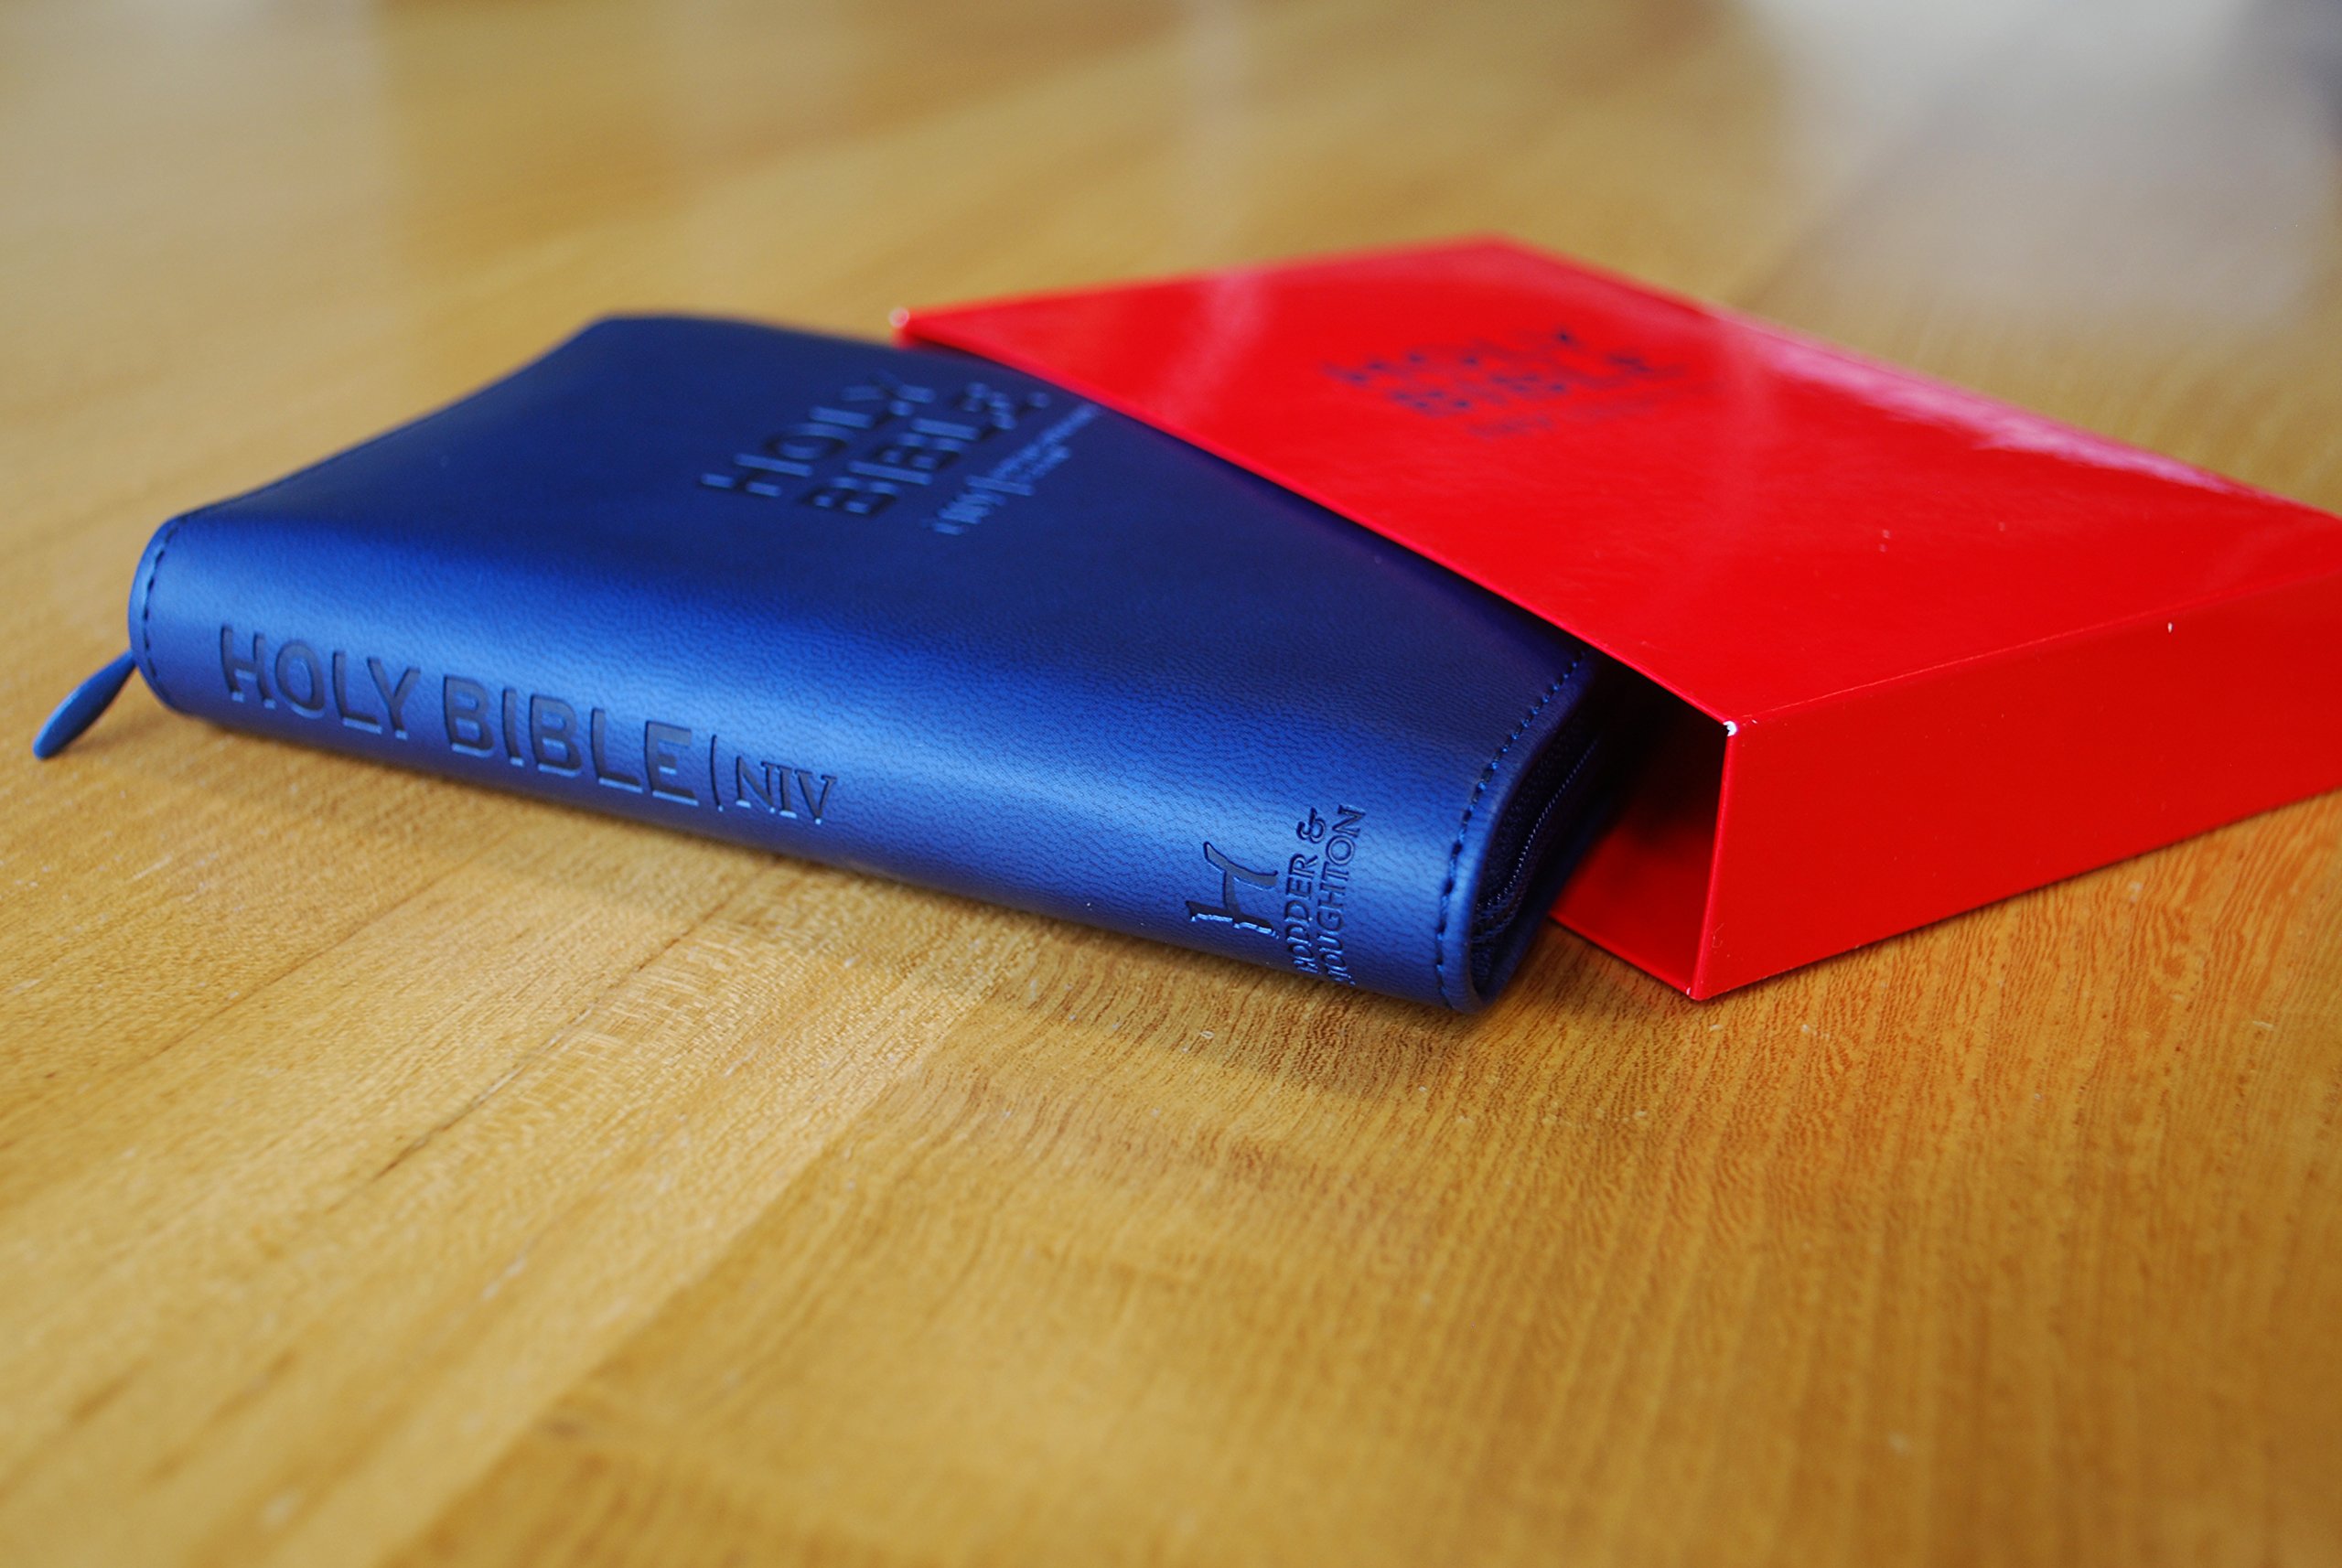 NIV Tiny Navy Soft-Tone Bible With Zip - Hodder & Stoughton